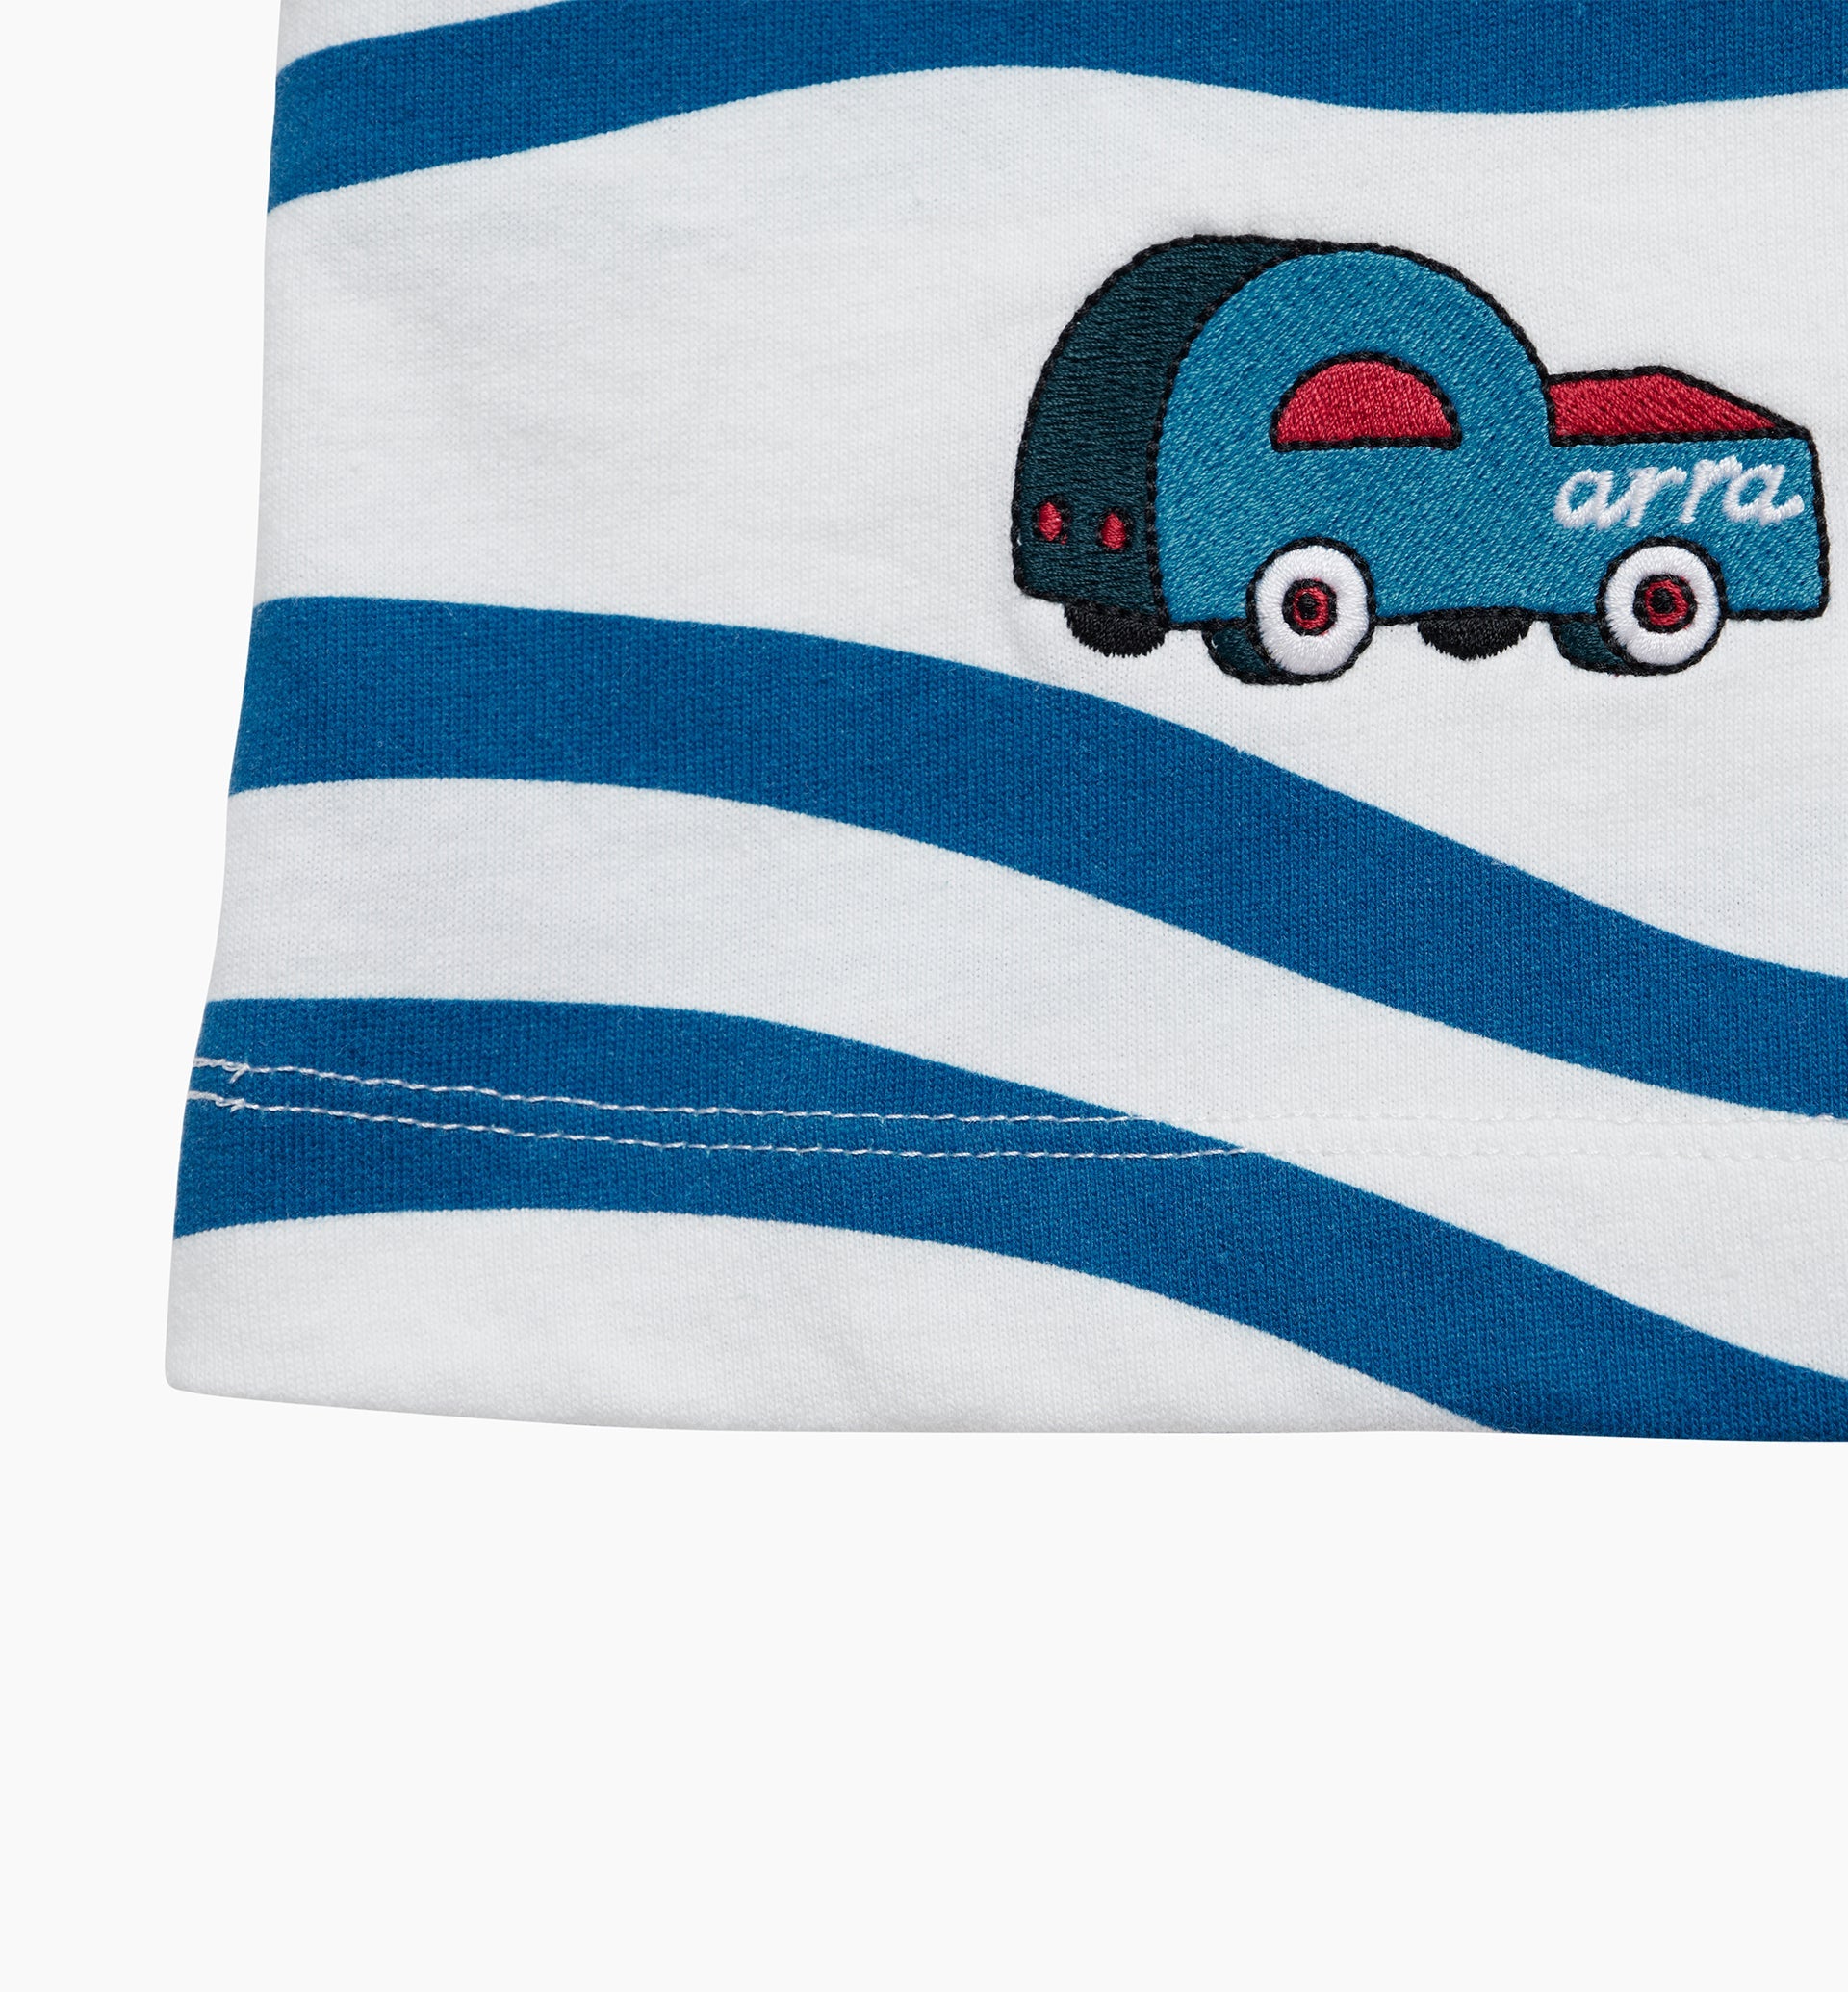 Parra - stupid car logo t-shirt